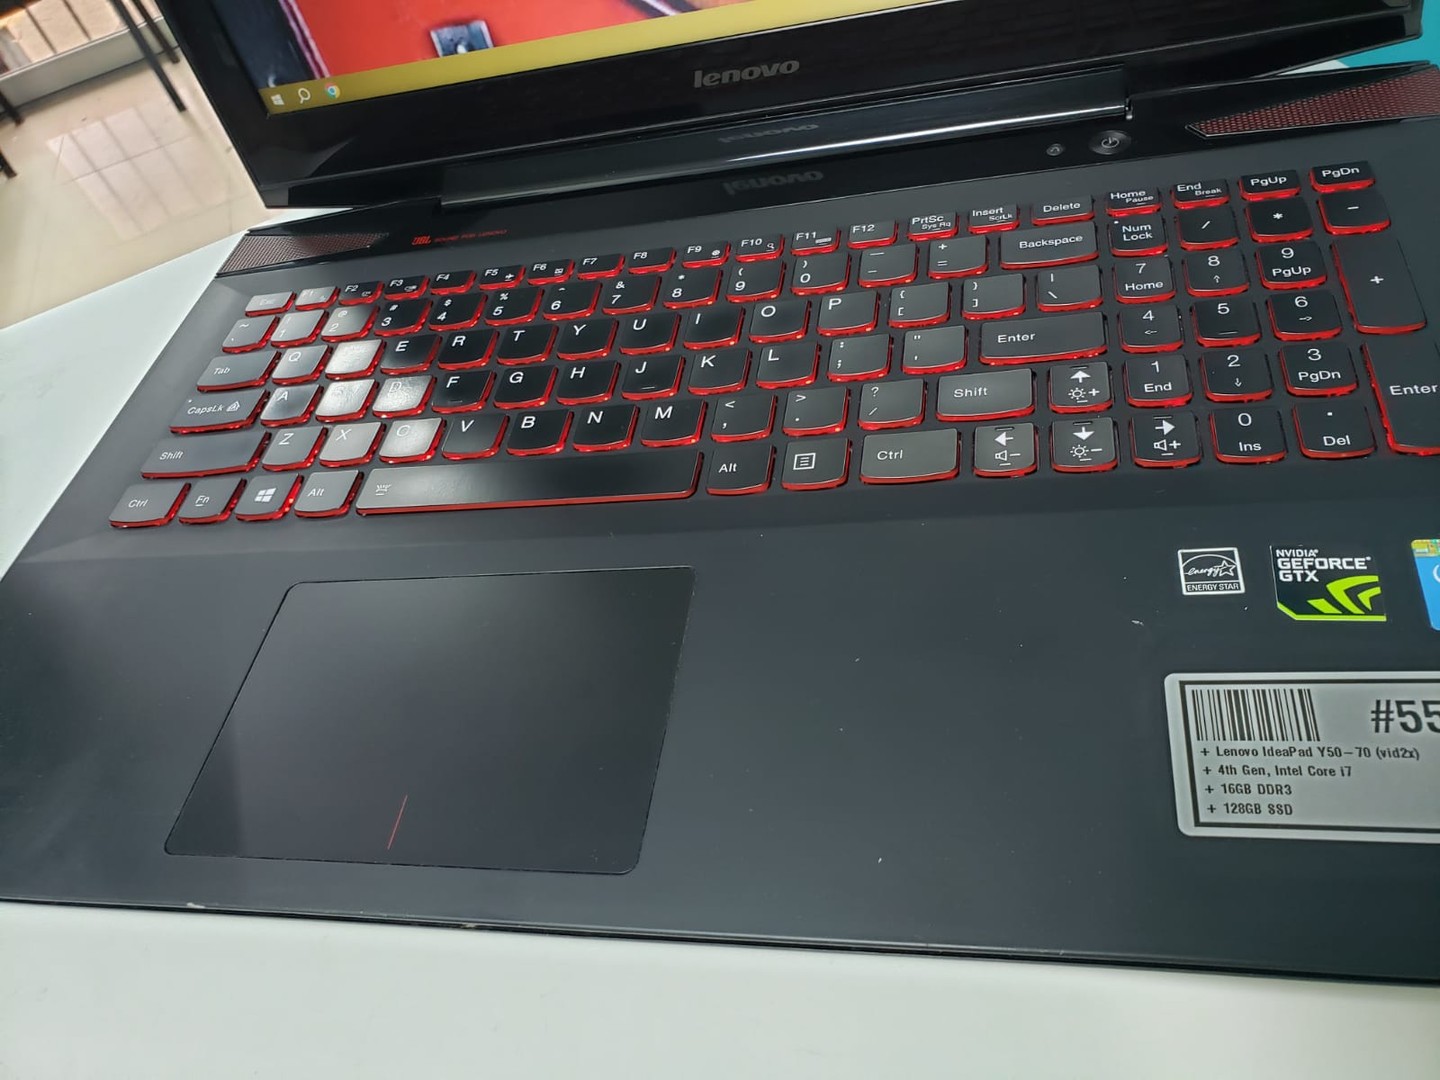 computadoras y laptops - Laptop, Gaming Lenovo Ideapad Y50-70 (vid2x) / 4th Gen, Intel Core i7 / 16GB DDR 8